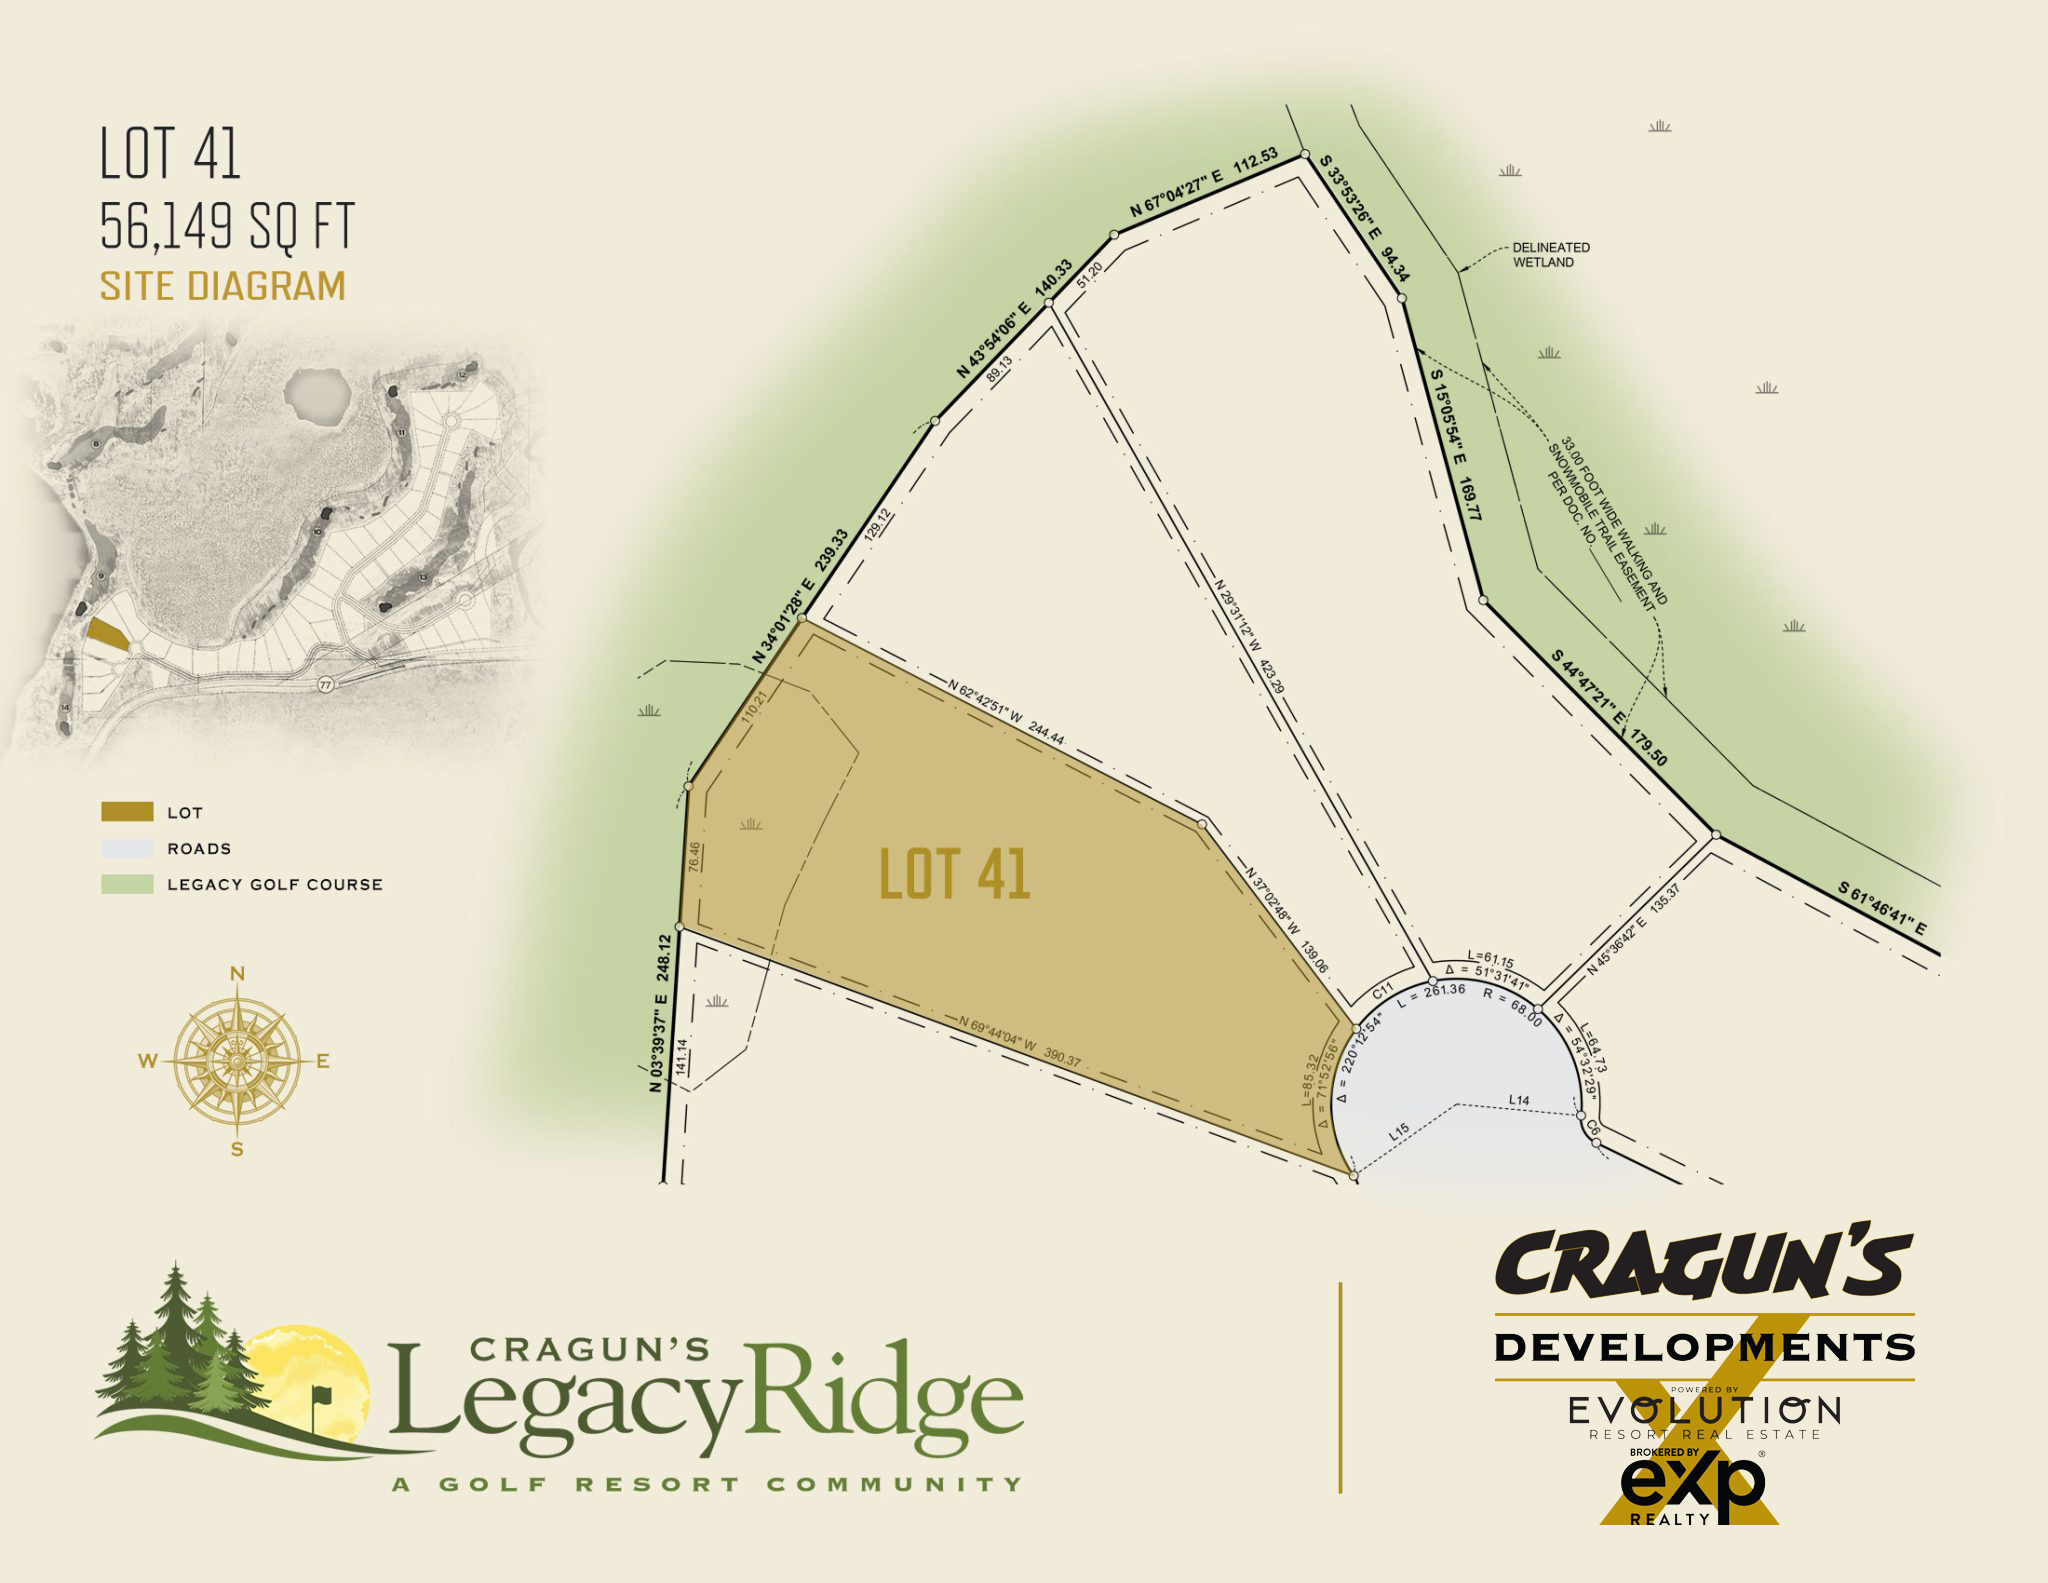 Legacy Ridge Lot 41 at Cragun's Developments in Brainerd, MN